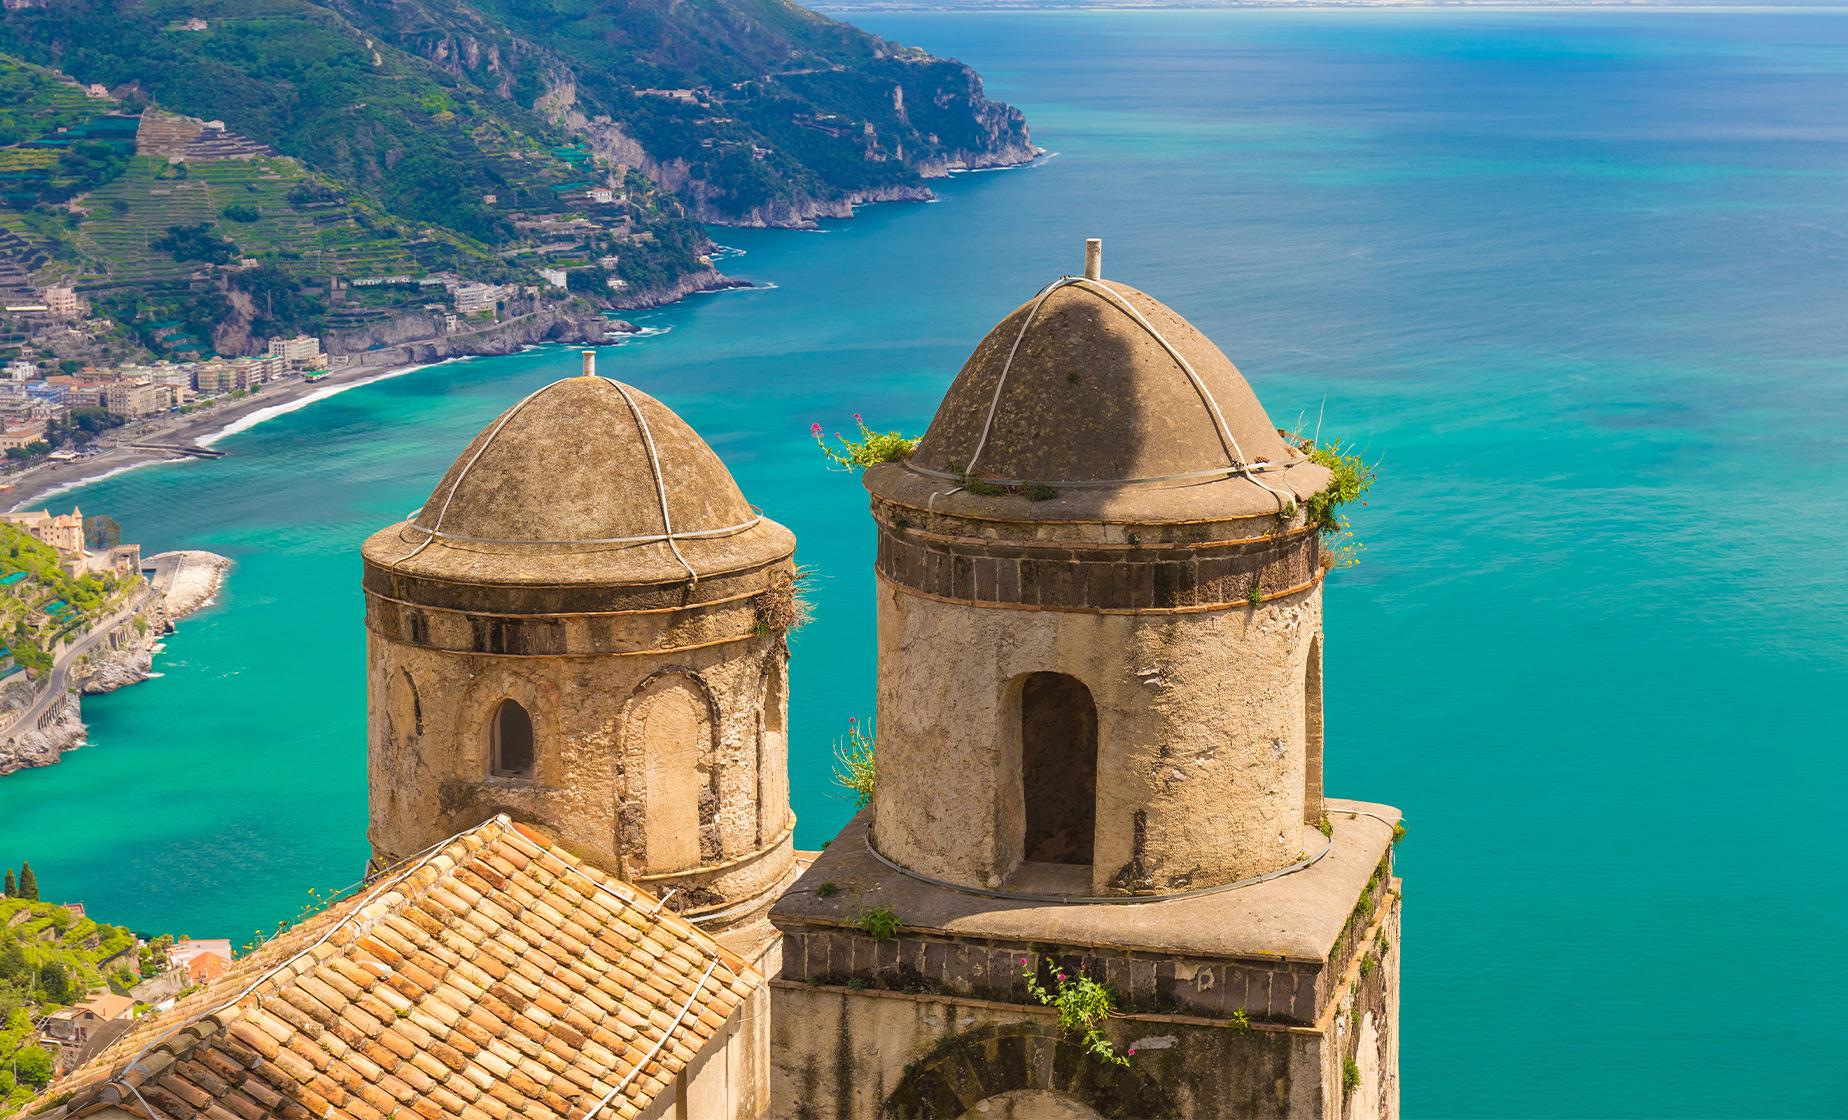 Private Splendors of the Amalfi Coast Tour from Sorrento